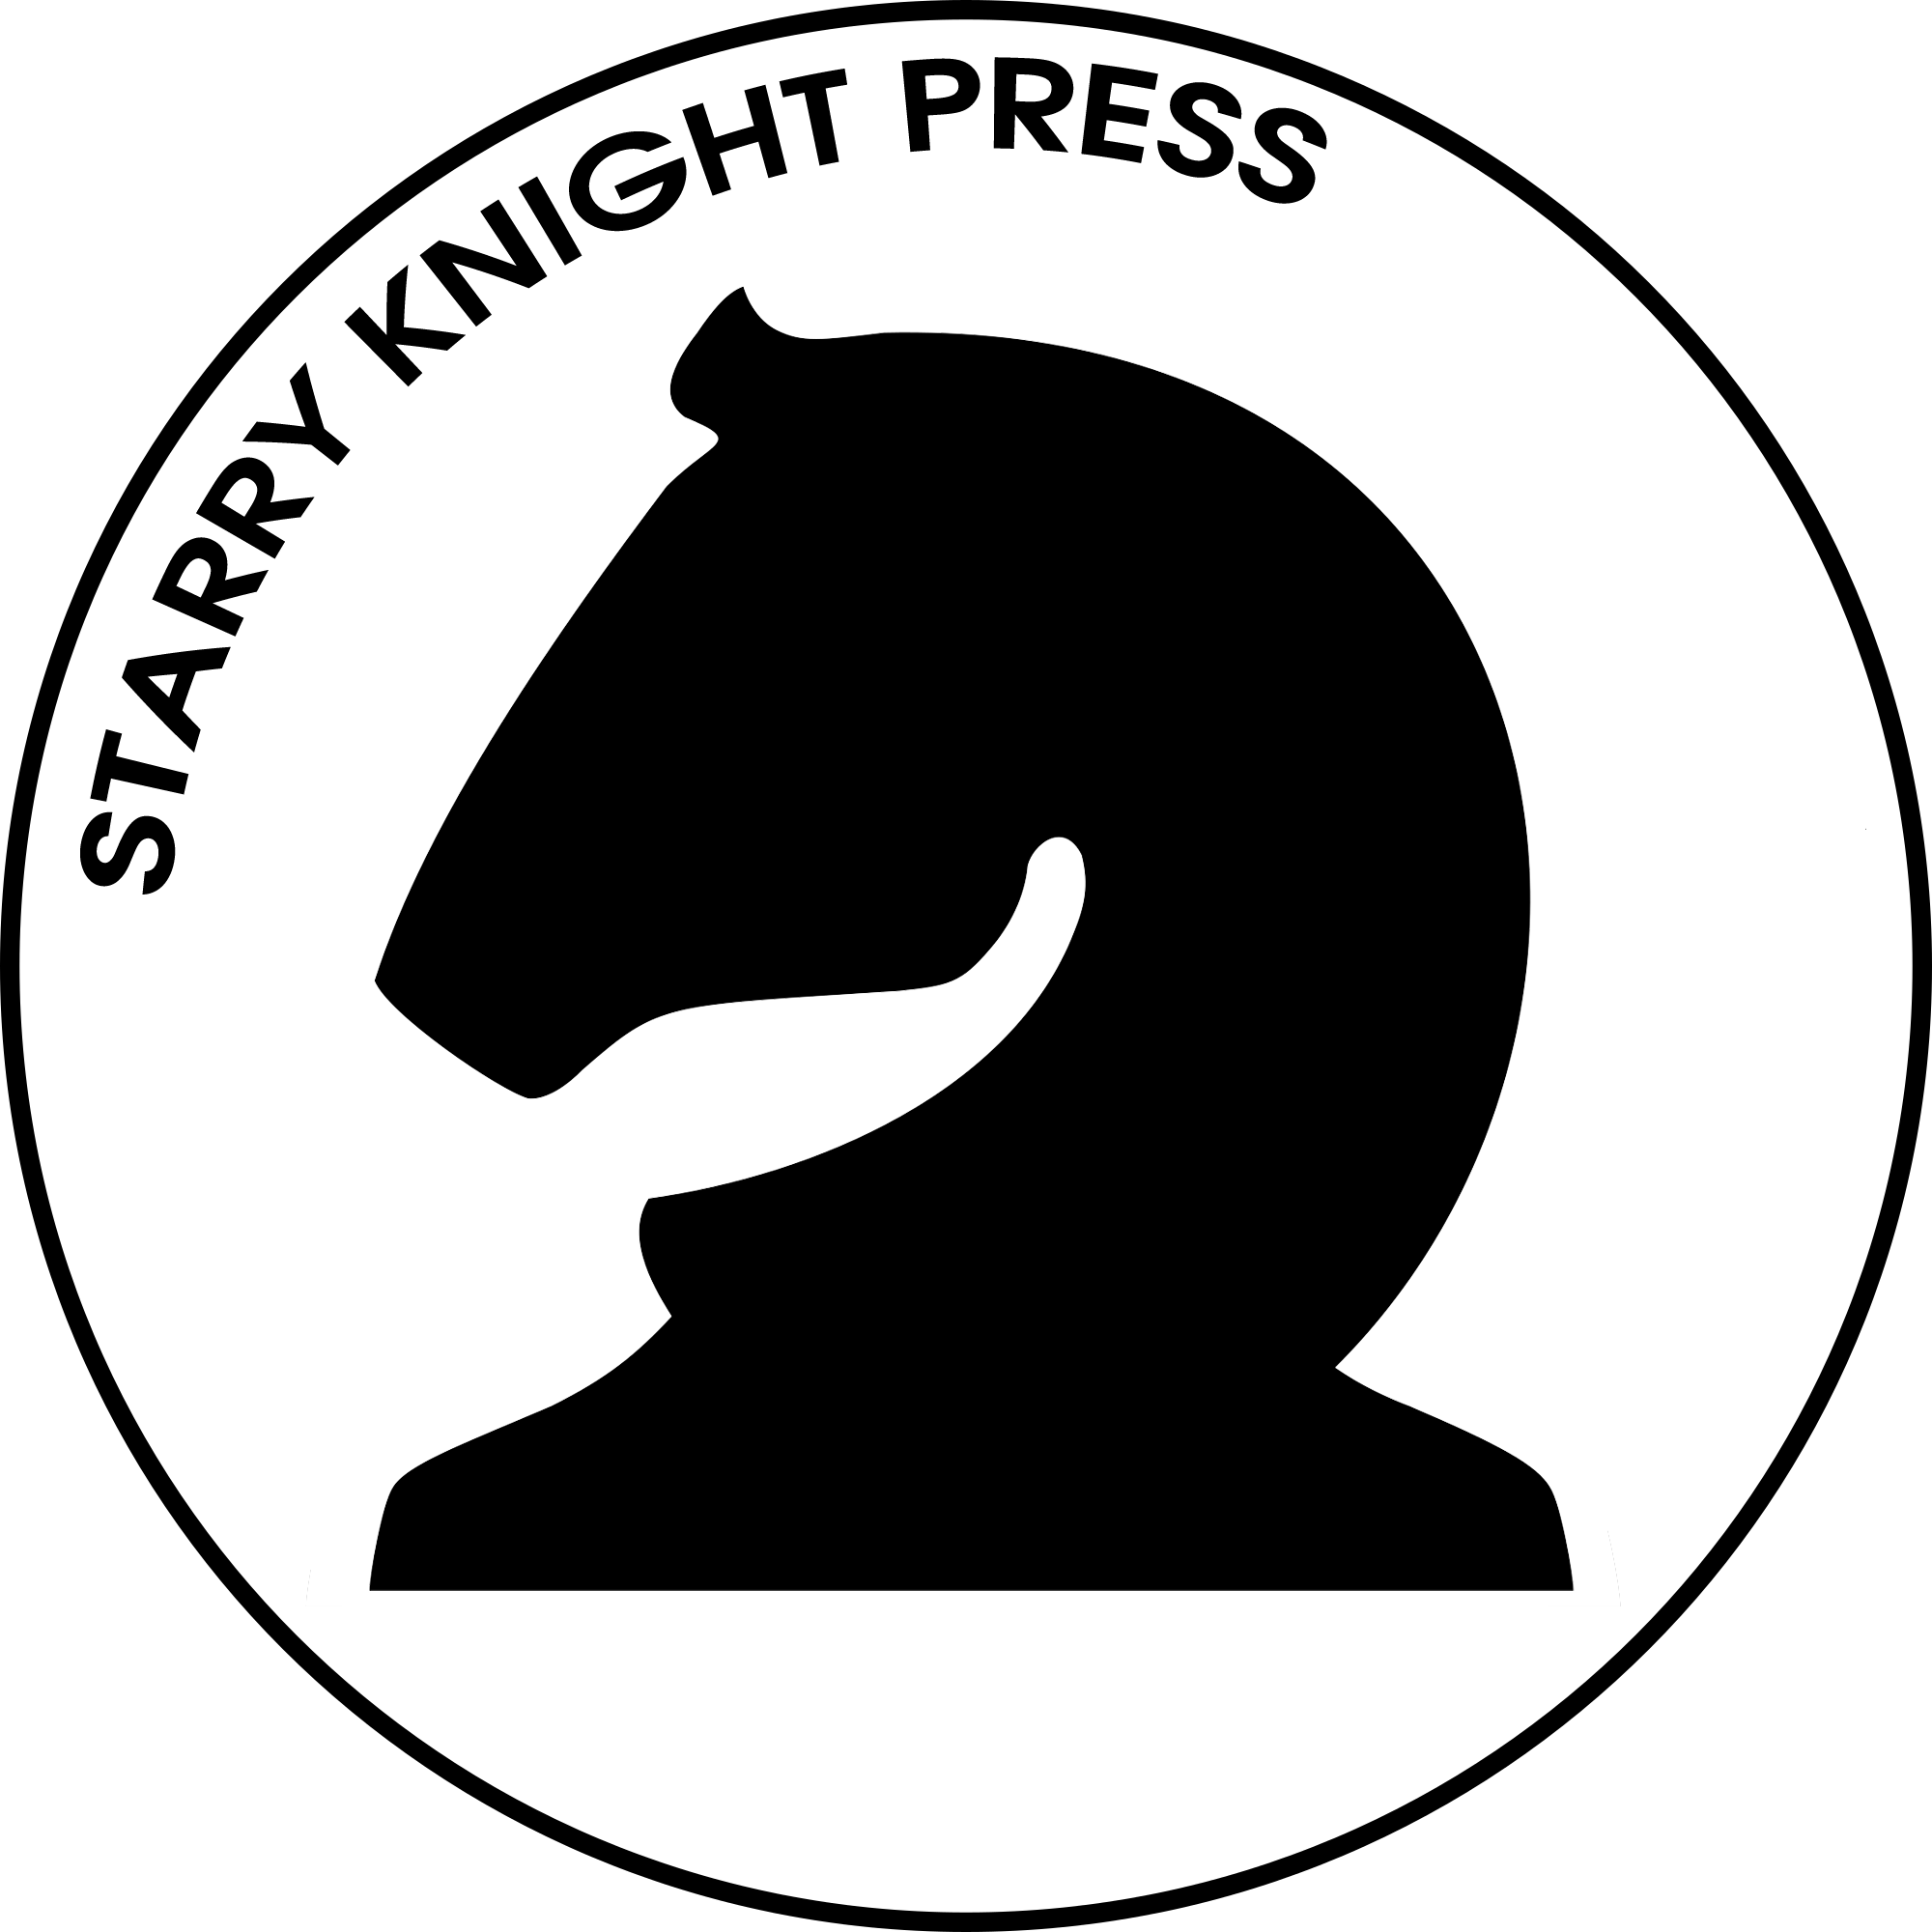 Starry Knight Press